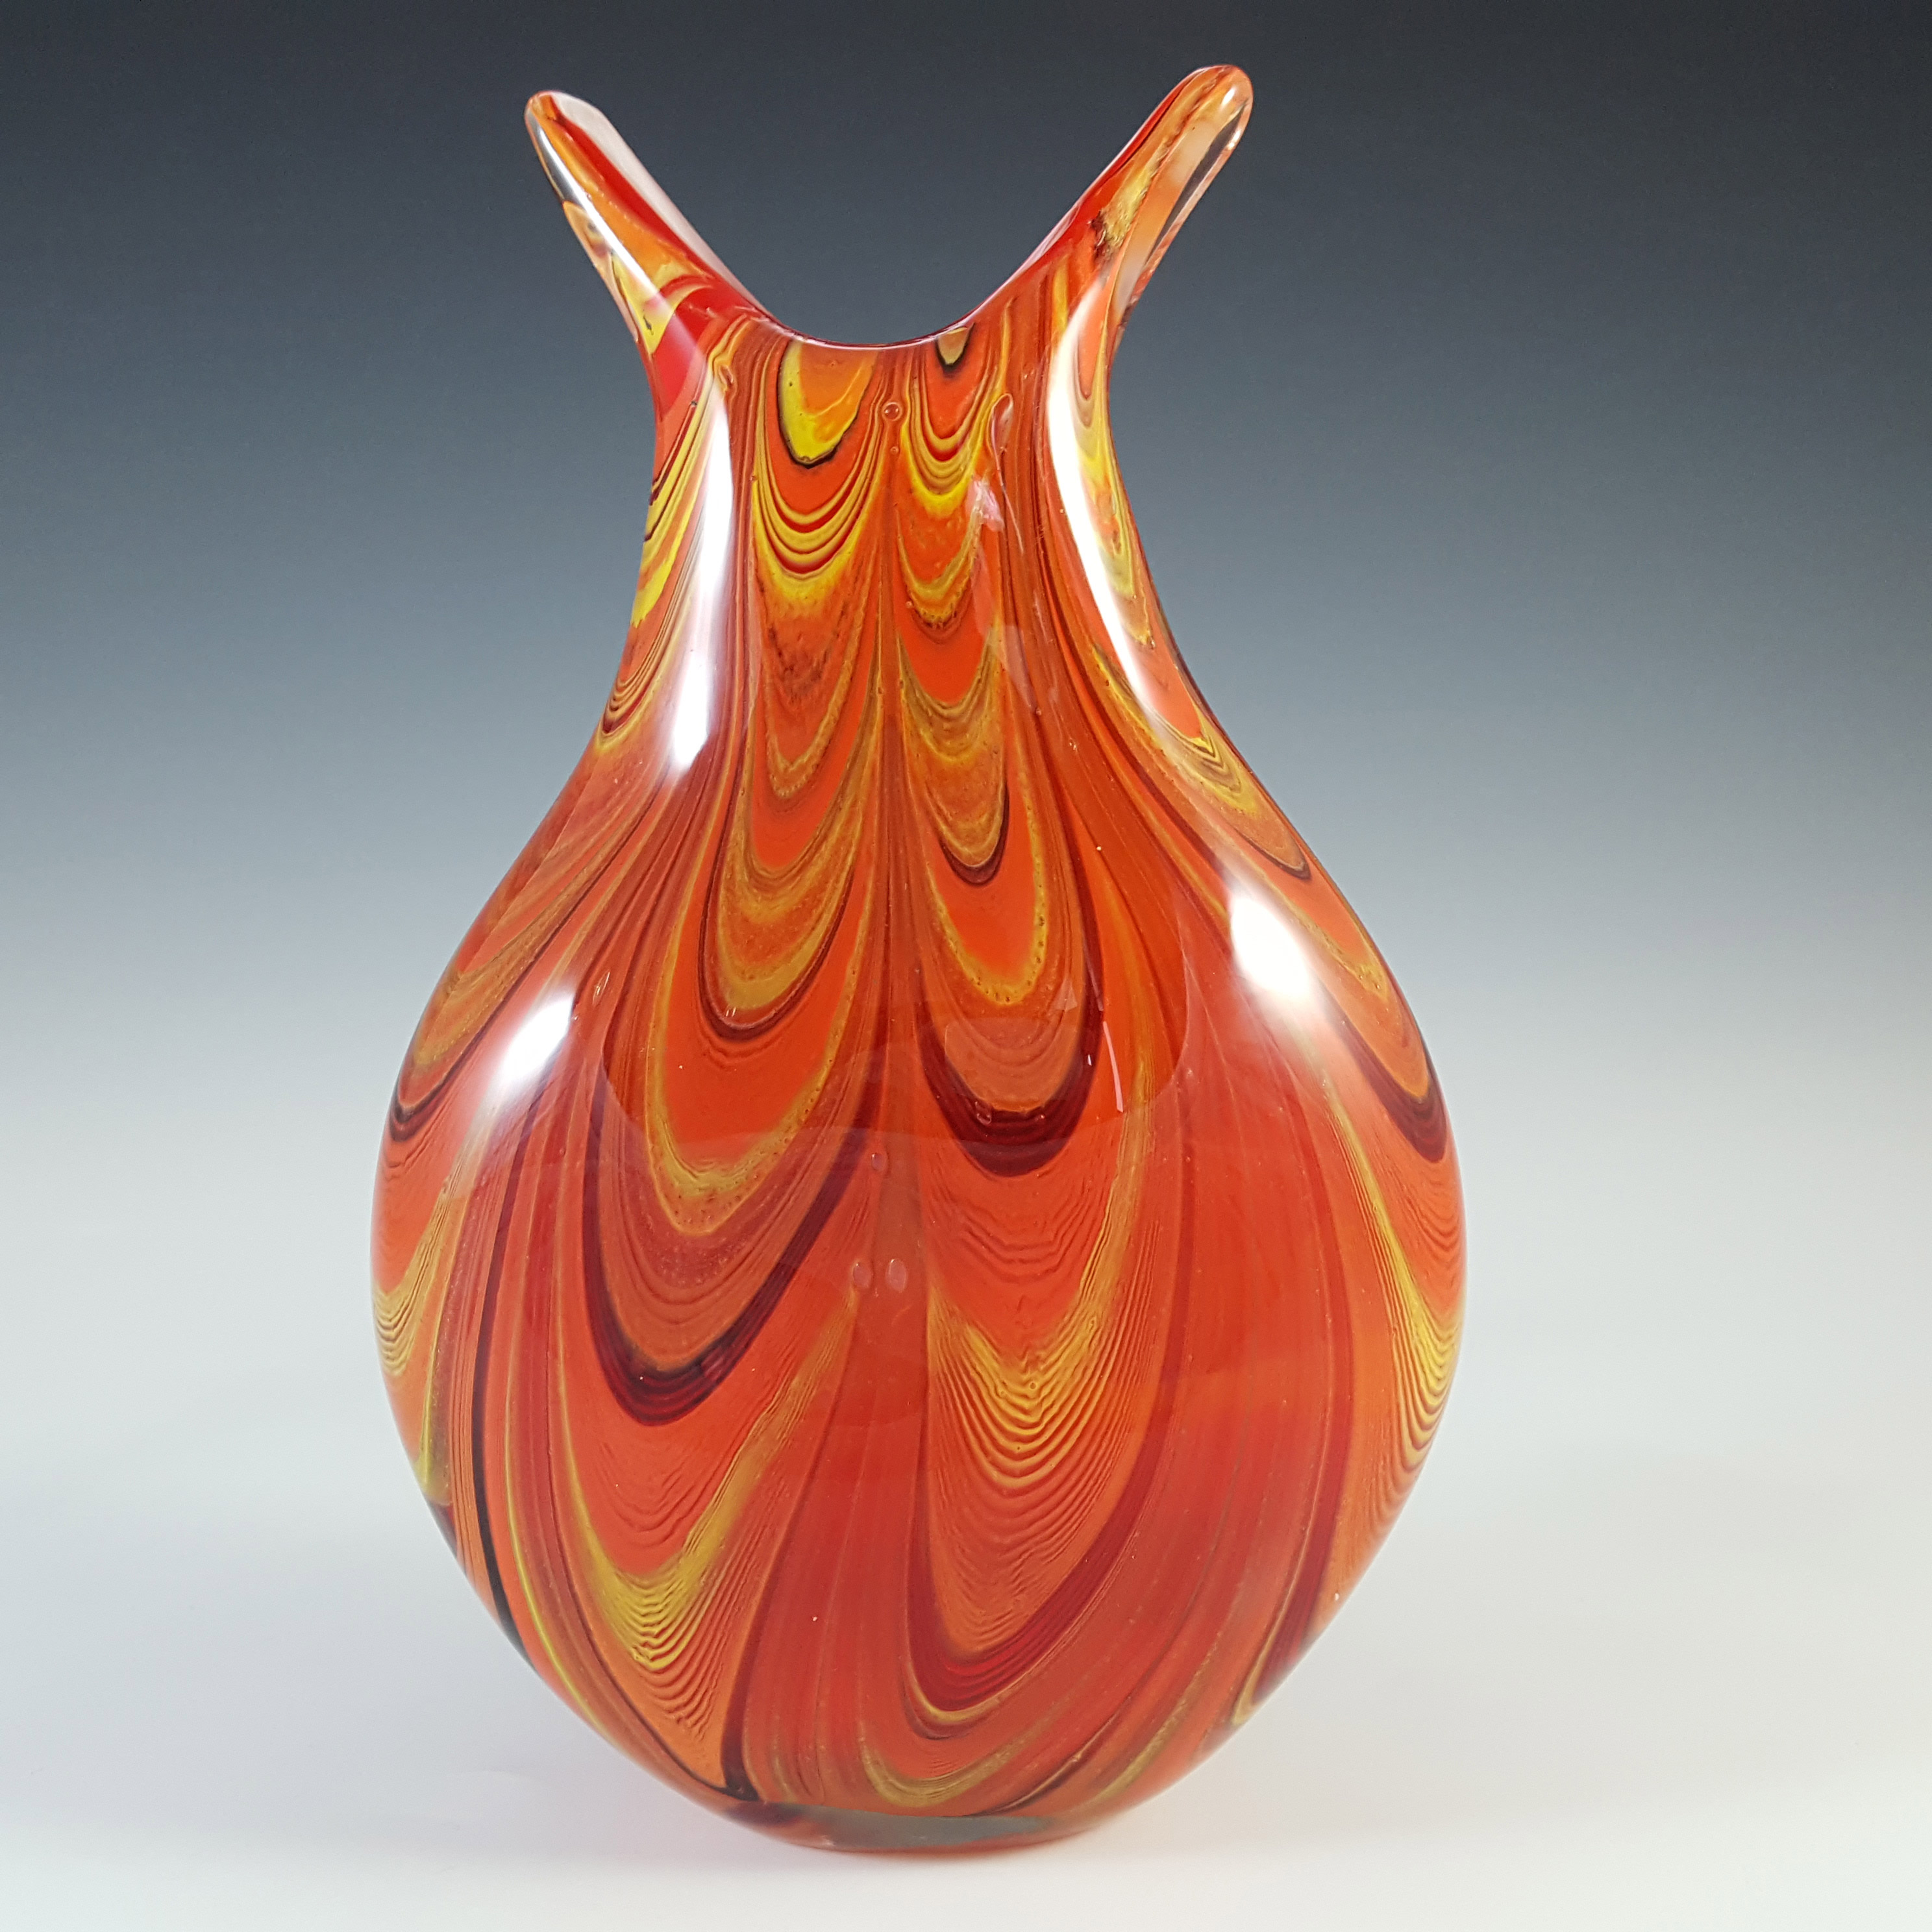 L. Dal Borgo Orange Glass Vase, Signed & Labelled - Click Image to Close